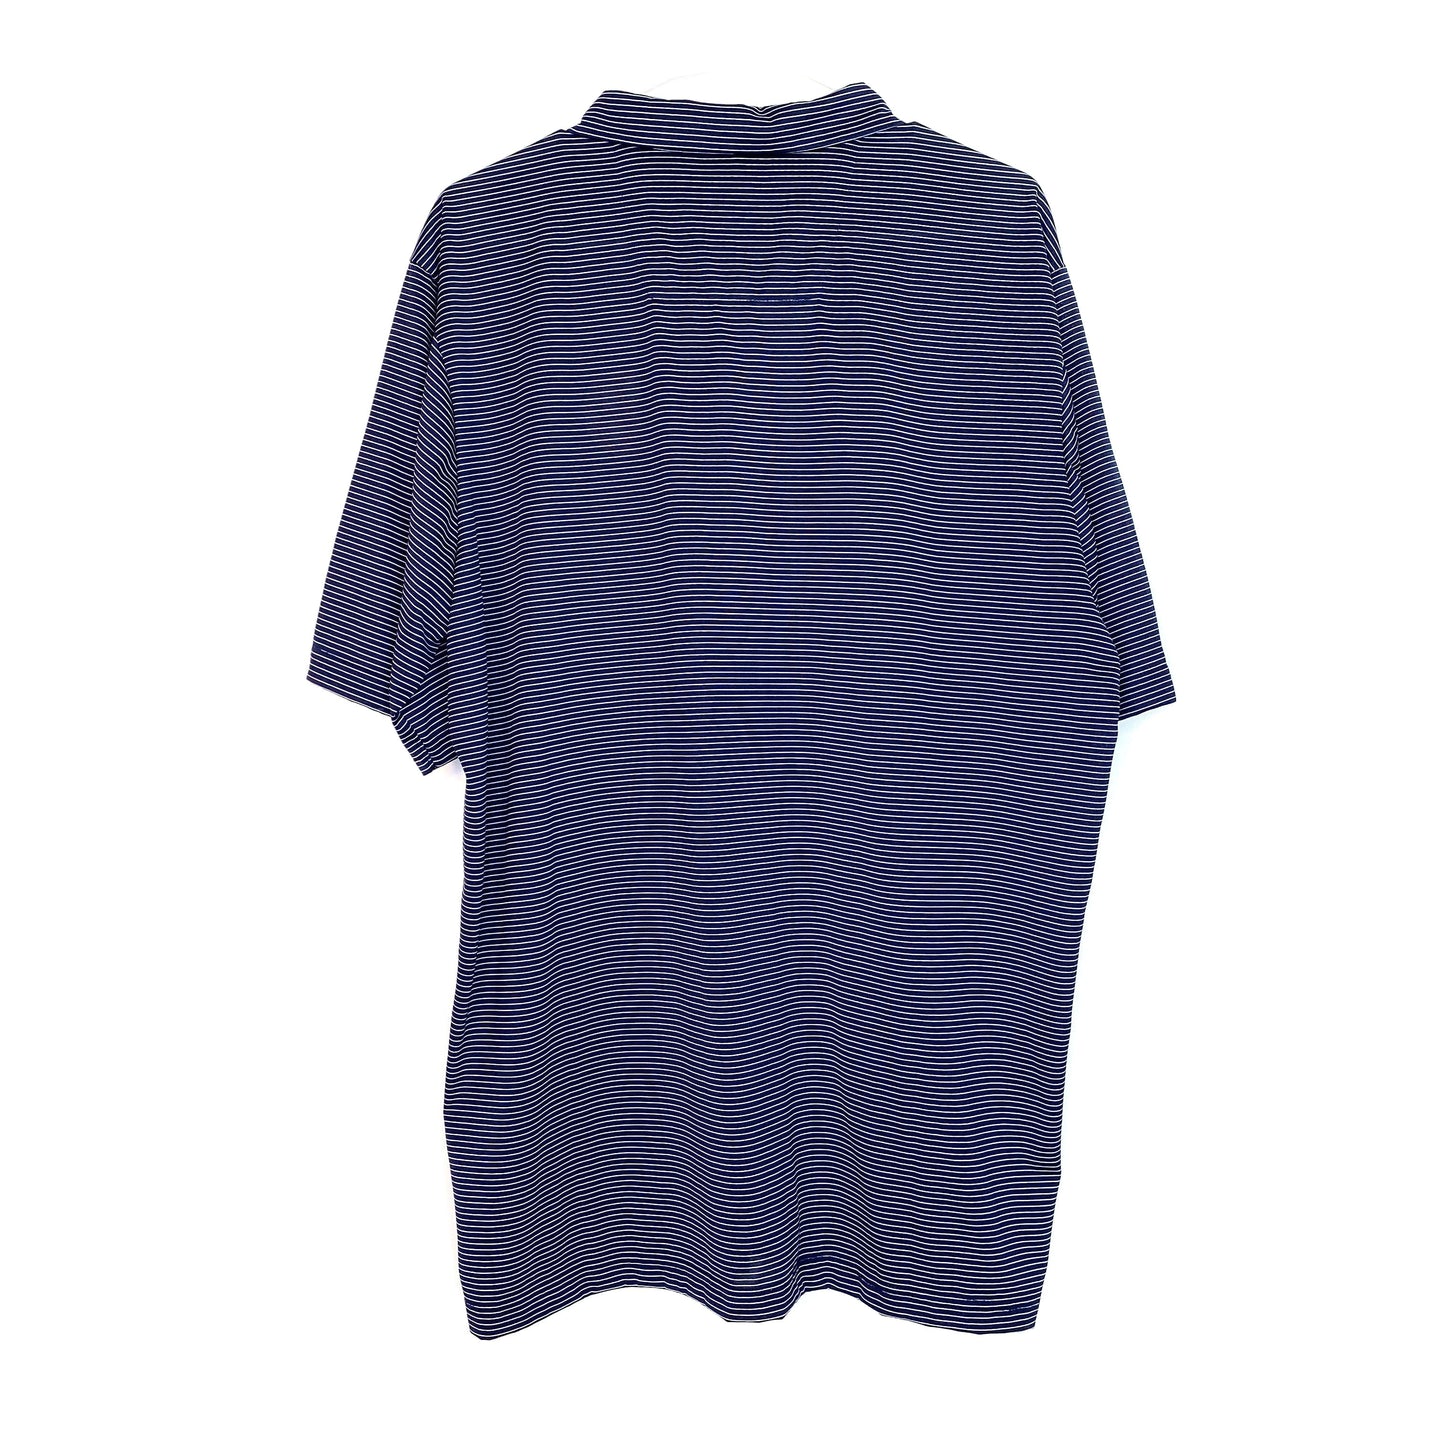 Antigua Mens Size XL Blue White Striped Boston Redsox Golf Polo Shirt